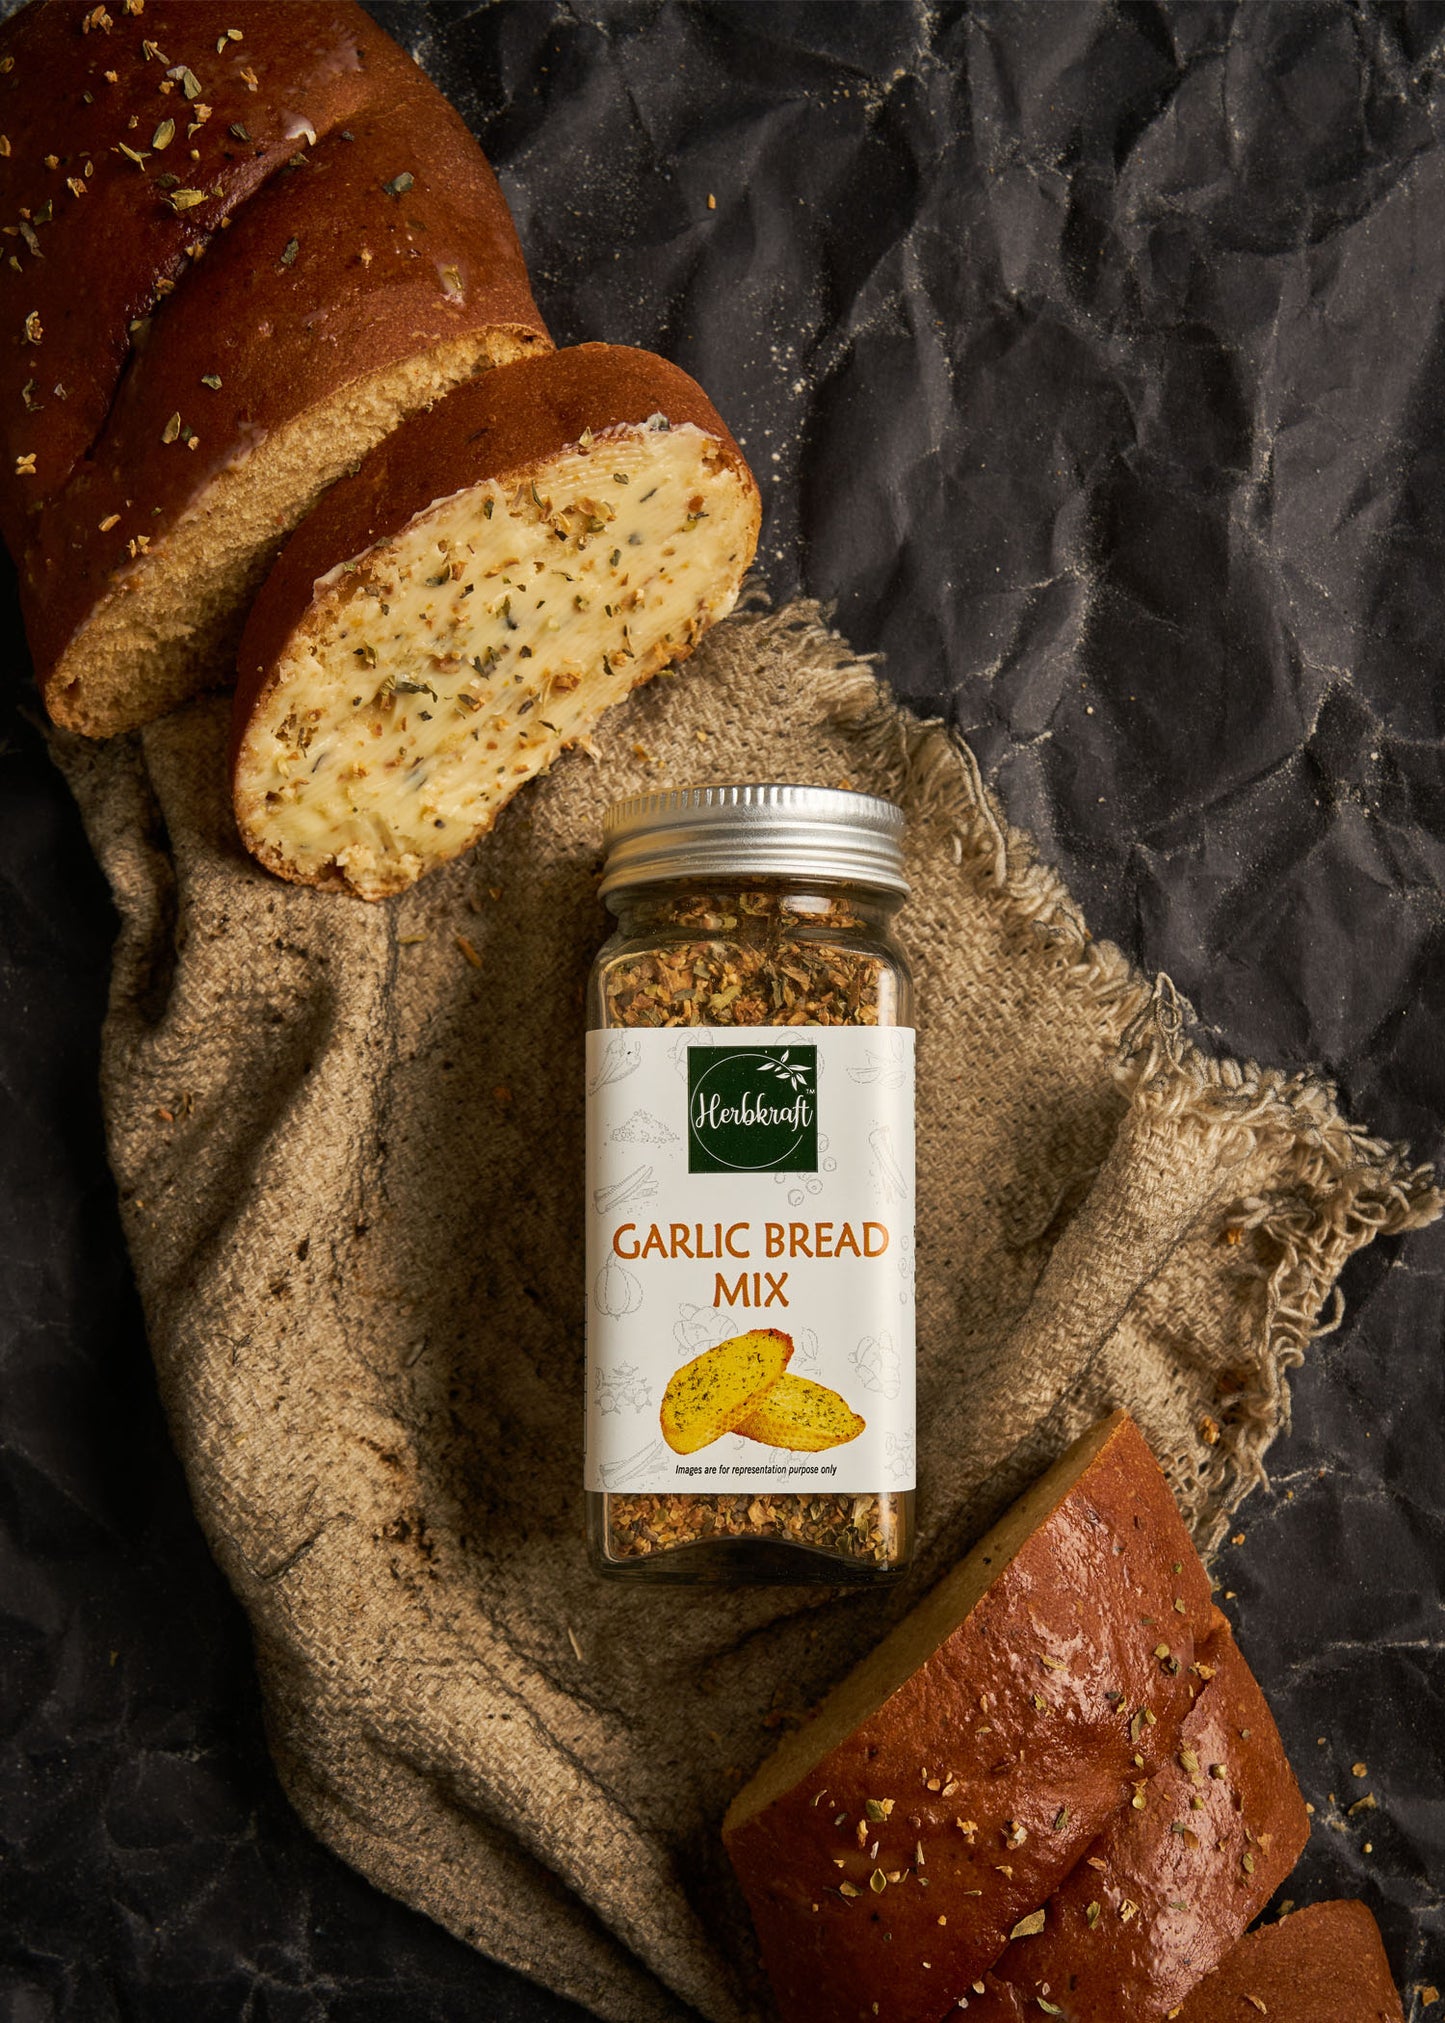 Herbkraft Garlic Bread Mix